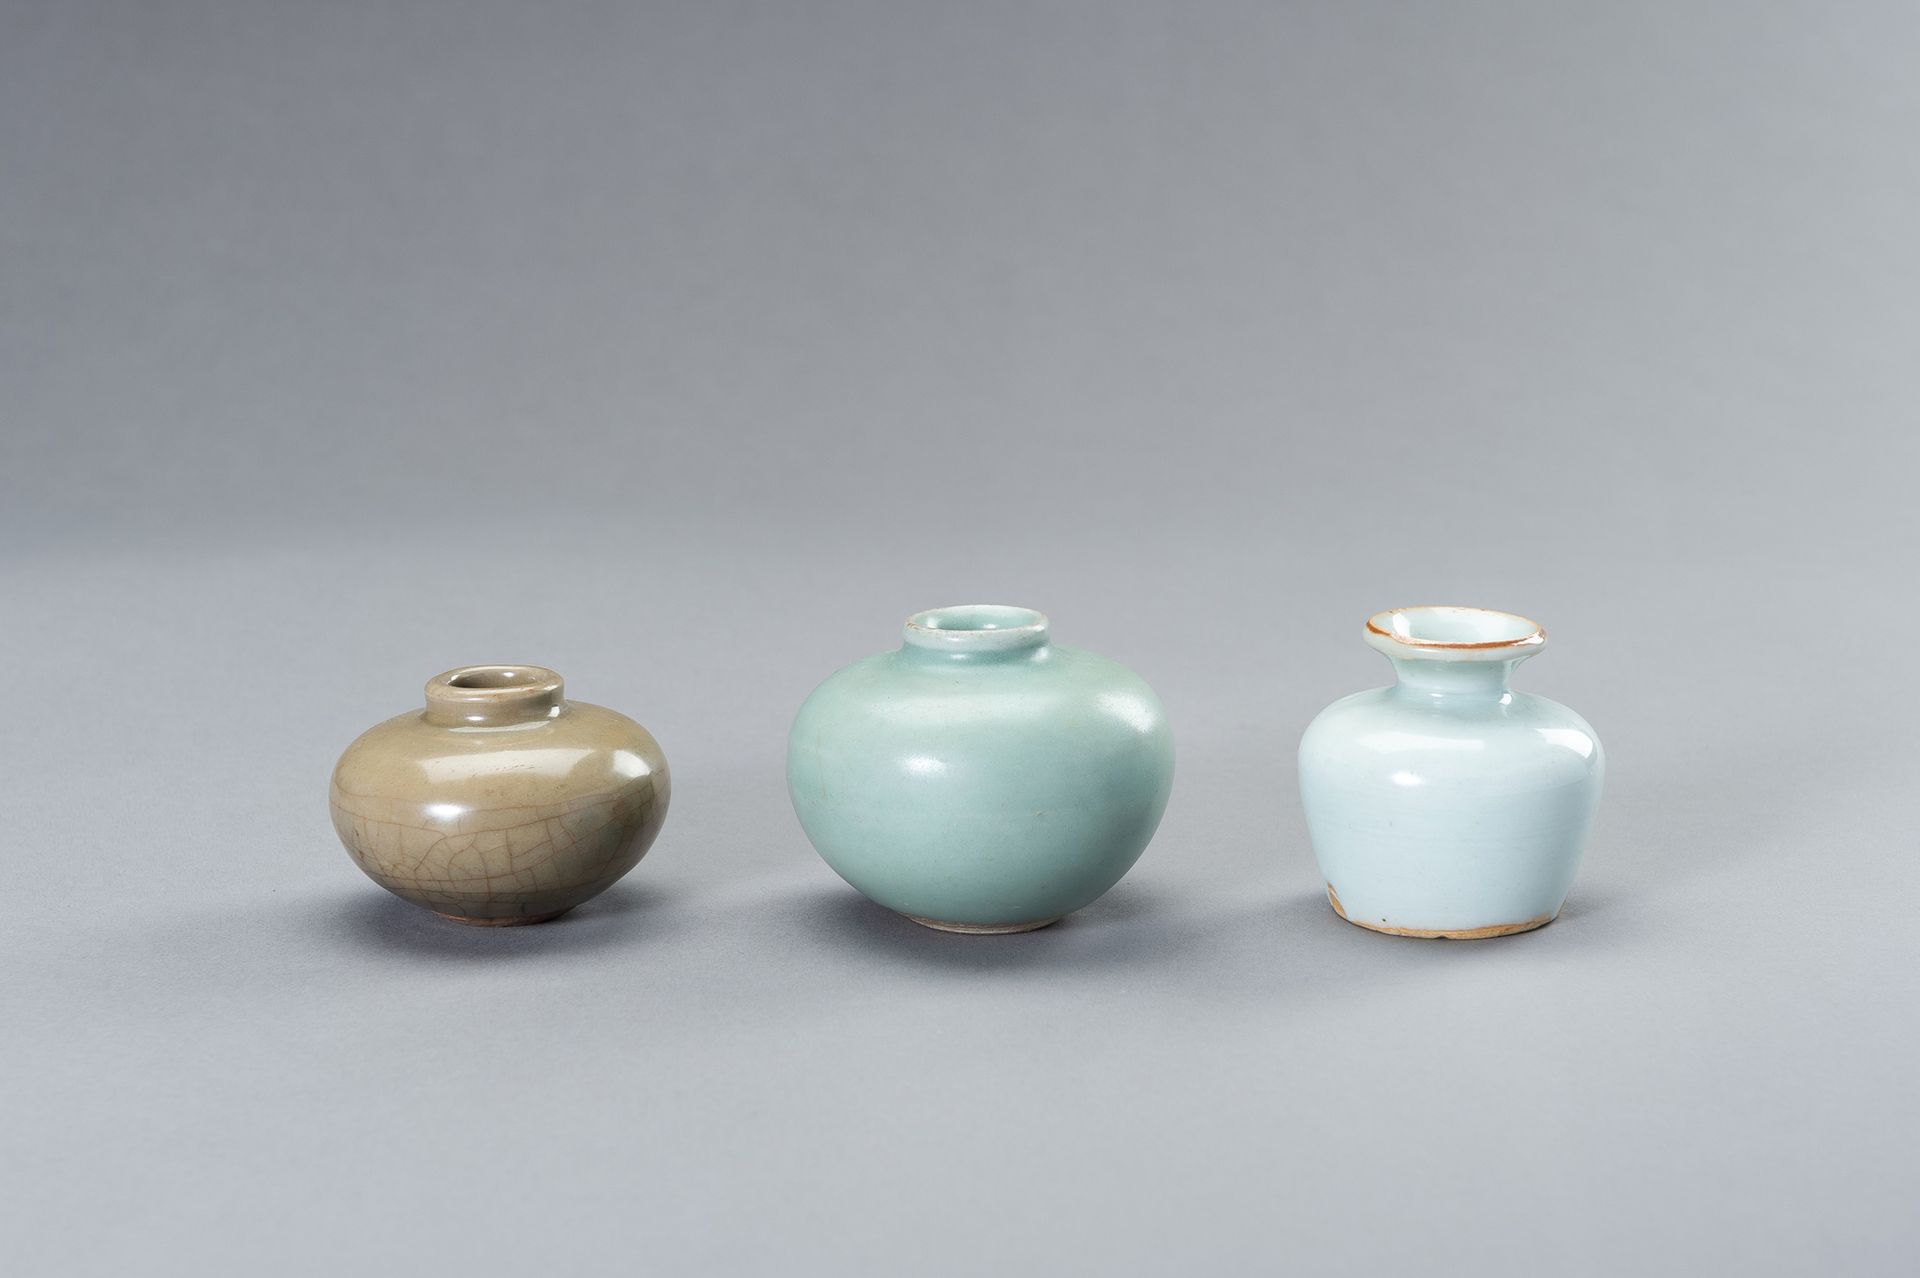 THREE SMALL CELADON GLAZED JARS 三个小型青瓷釉罐
中国，明朝（1368-1644）。一个球状，短颈，浅蓝色的亚光青瓷釉。一件为球&hellip;